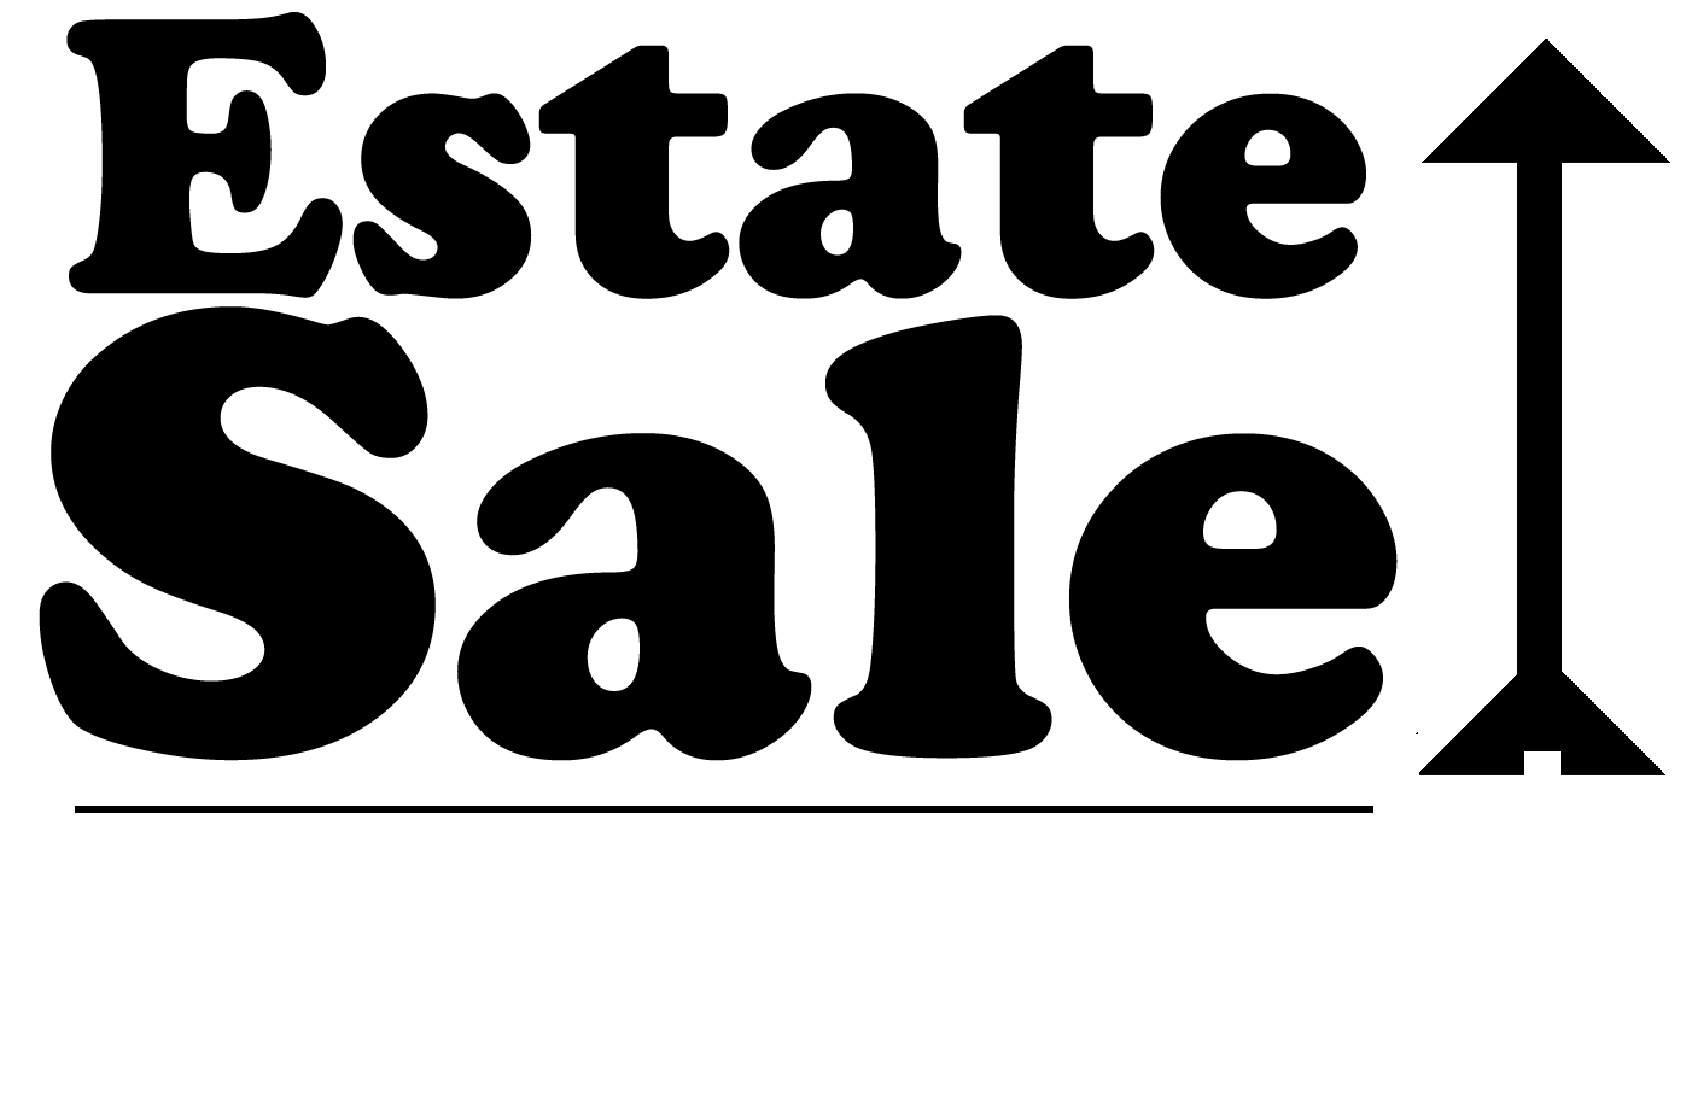 family-of-roy-stone-announces-estate-yard-sale-wednesday-through